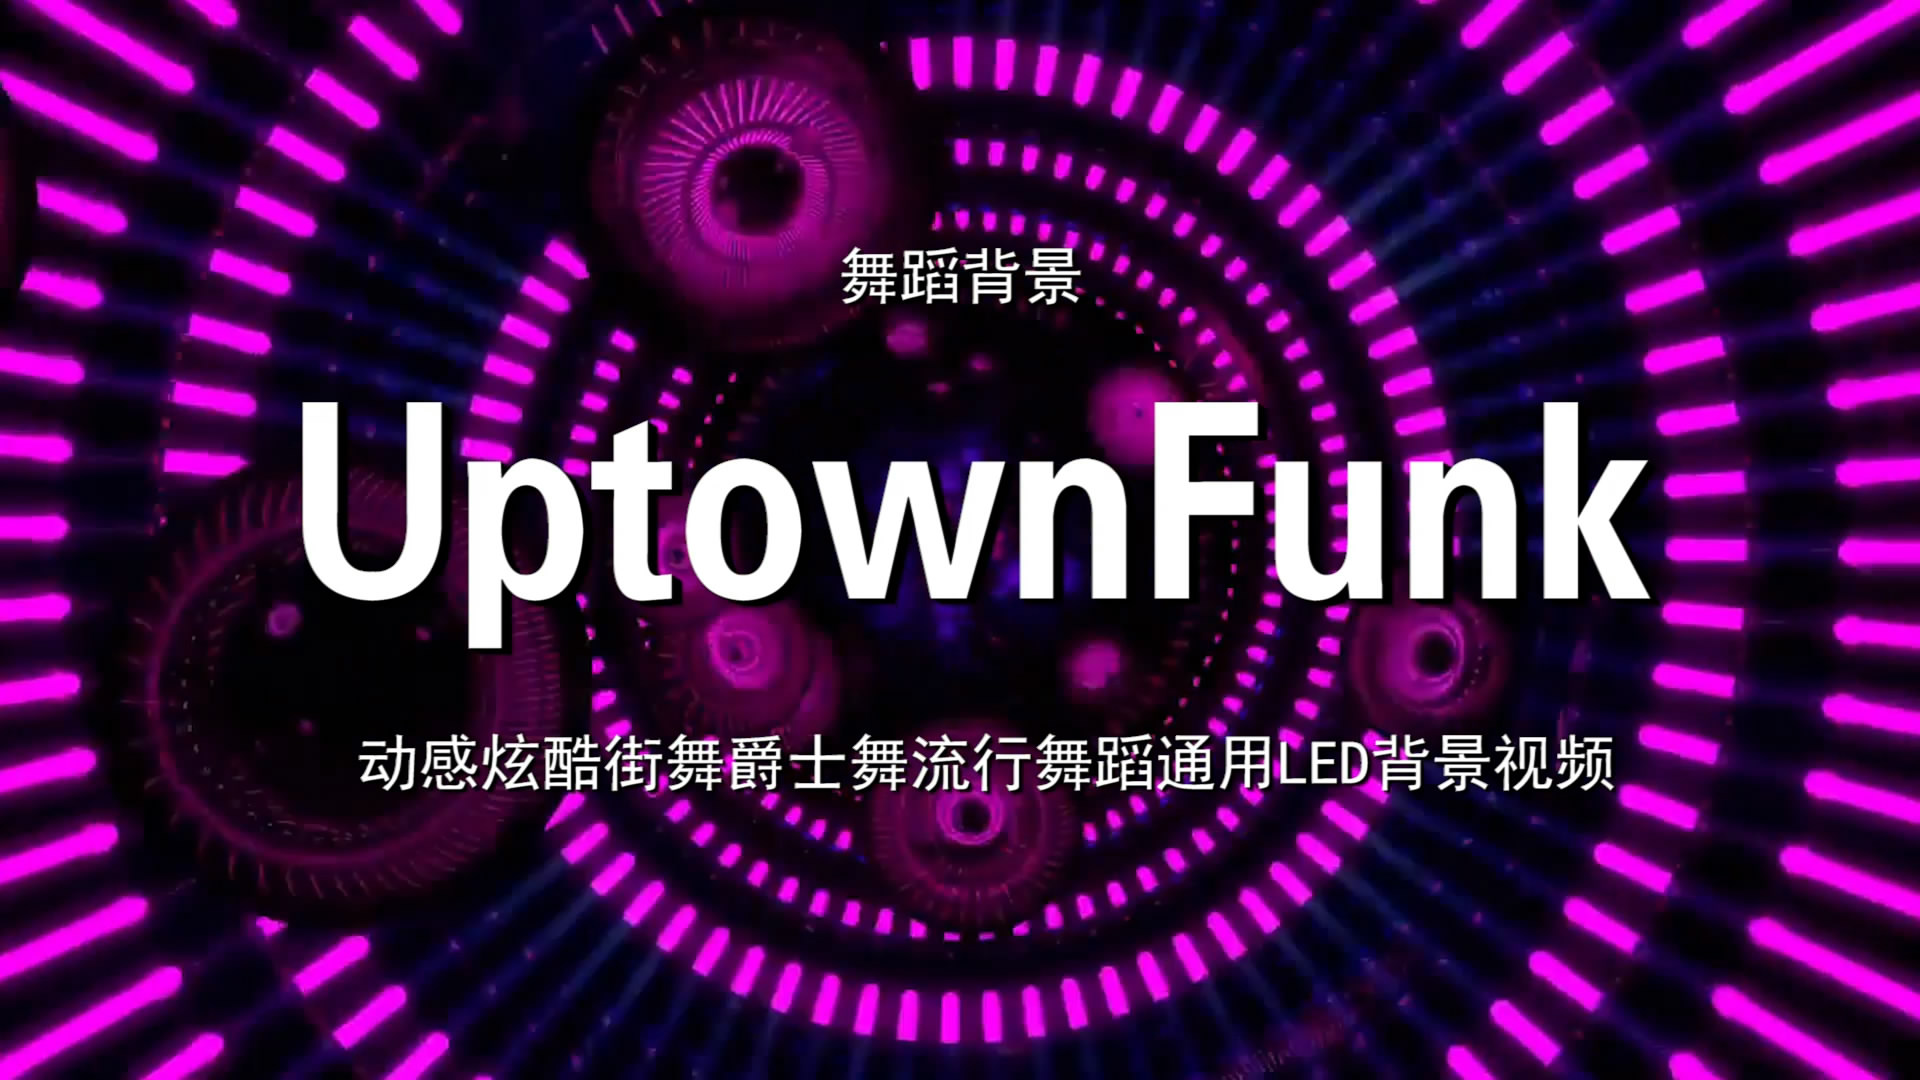 UptownFunk 动感炫酷街舞流行歌舞LED背景大屏幕视频